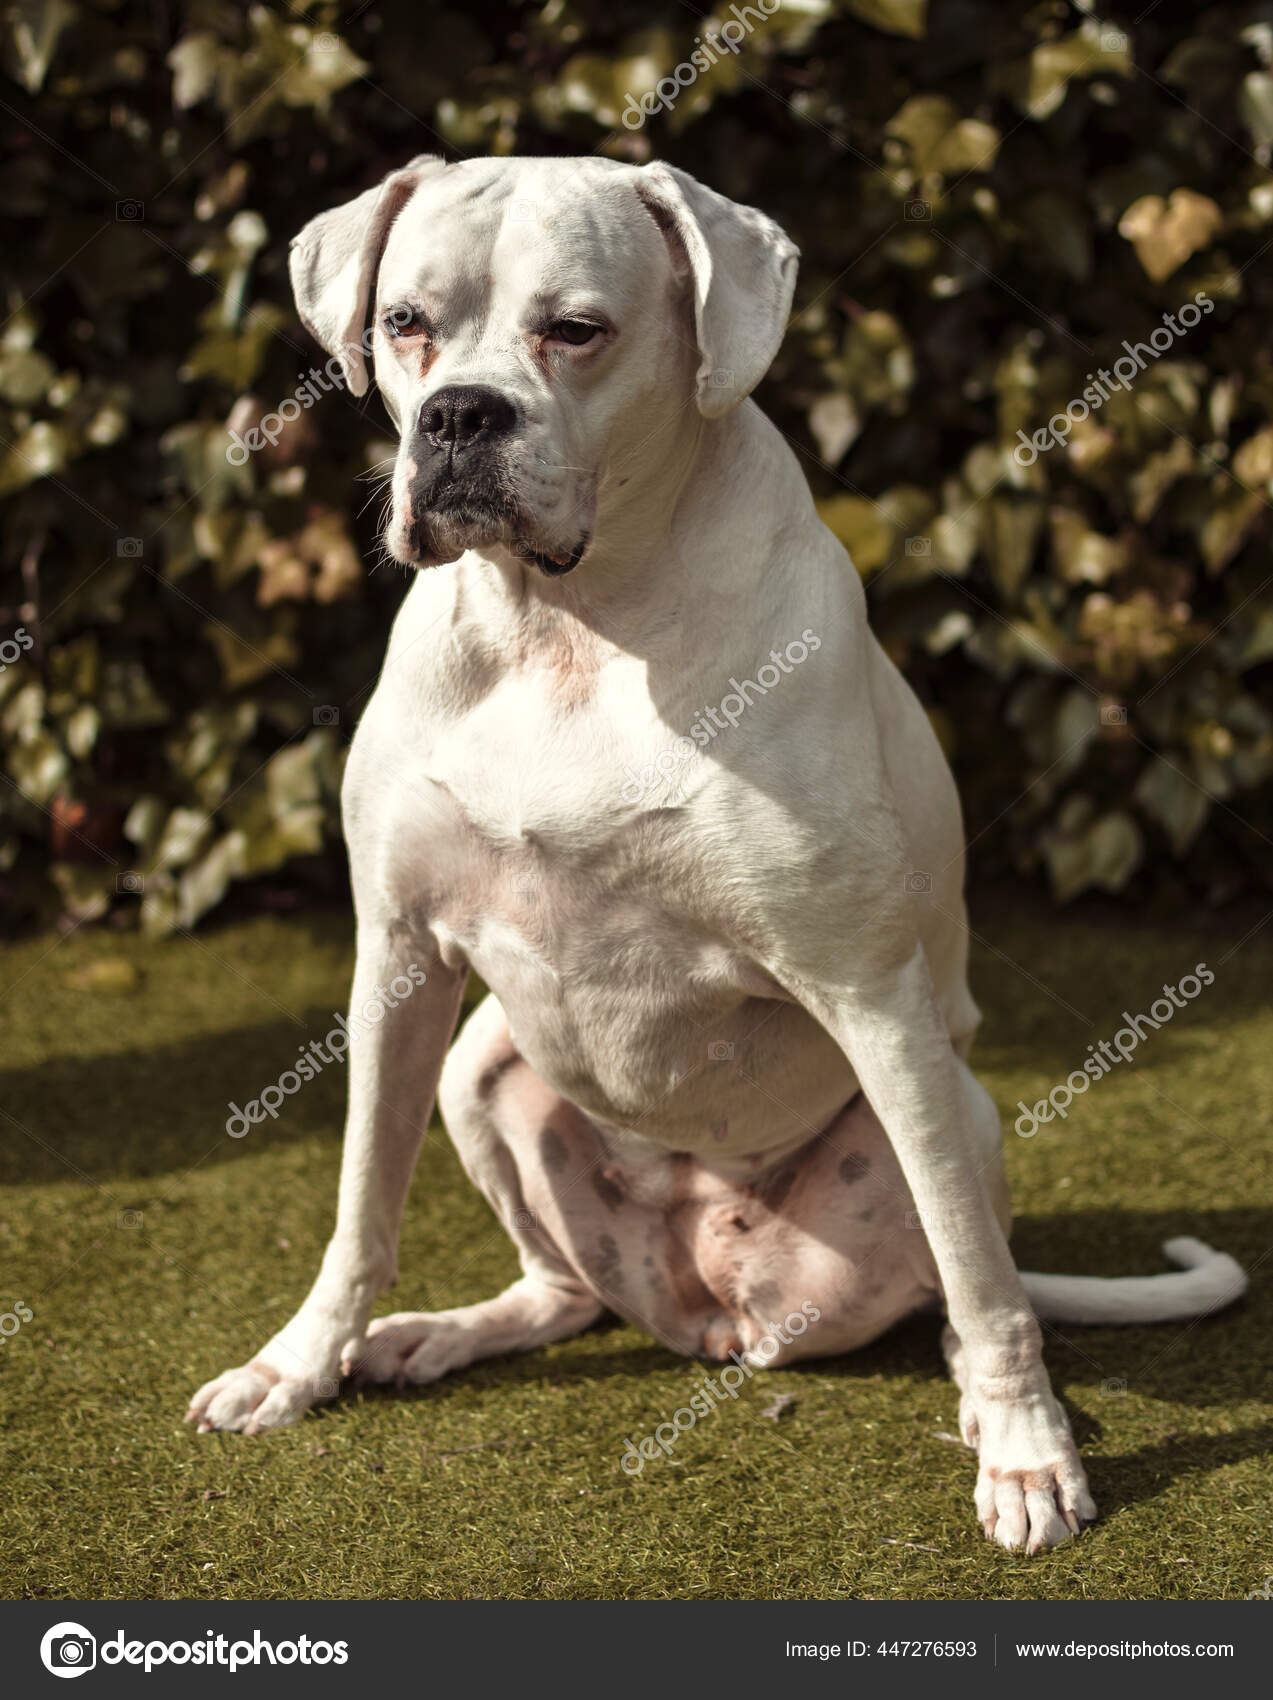 https://st2.depositphotos.com/43192608/44727/i/1600/depositphotos_447276593-stock-photo-adult-white-boxer-dog-female.jpg